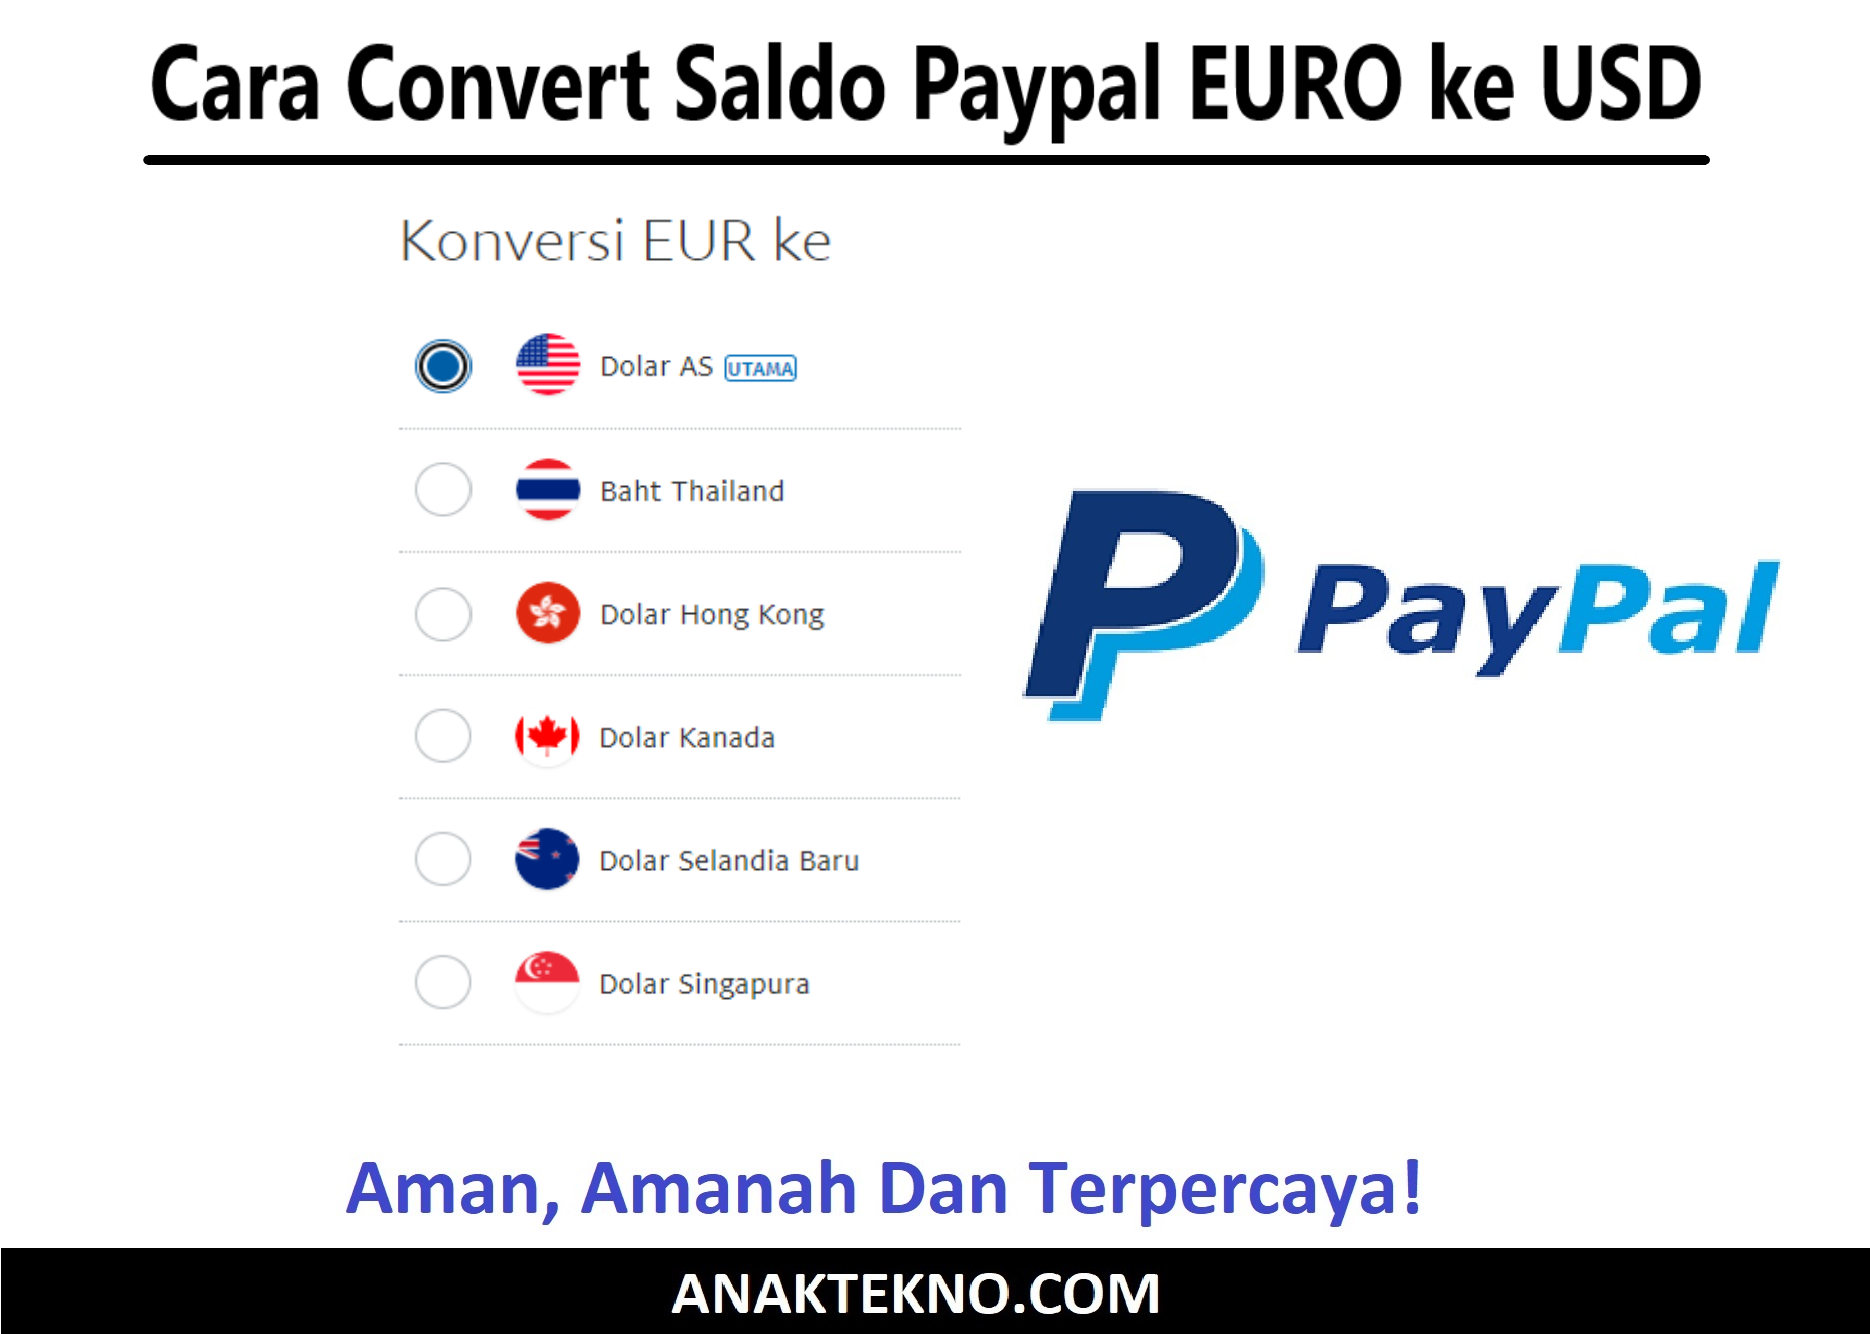 Cara Convert Saldo Paypal EURO ke USD